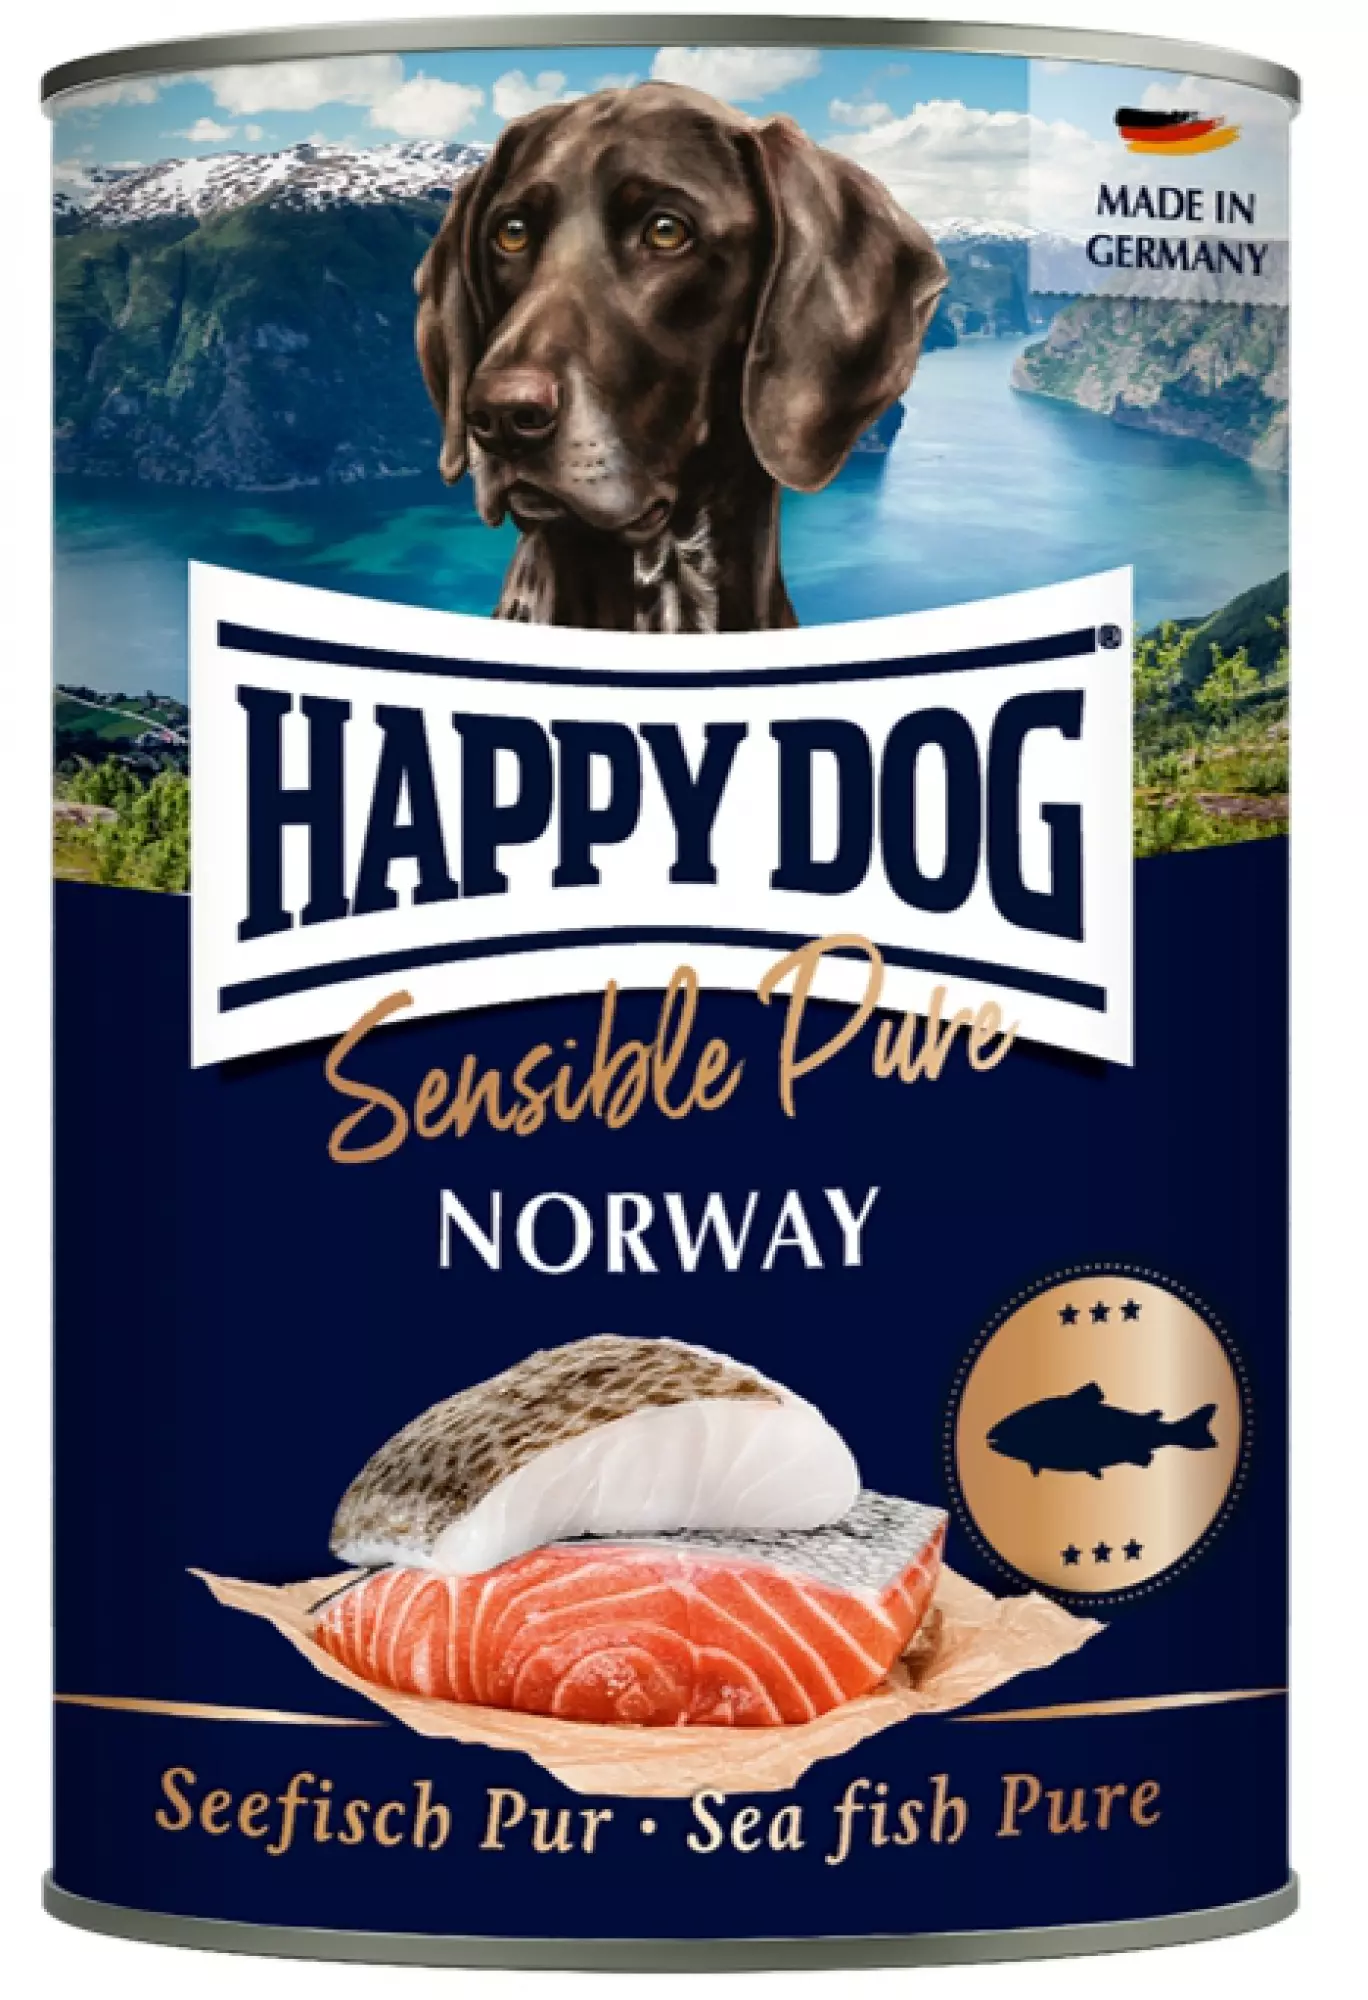 Happy Dog Supreme Sensible PUR KONZERV NORWAY (tengeri hal) 6X400 G